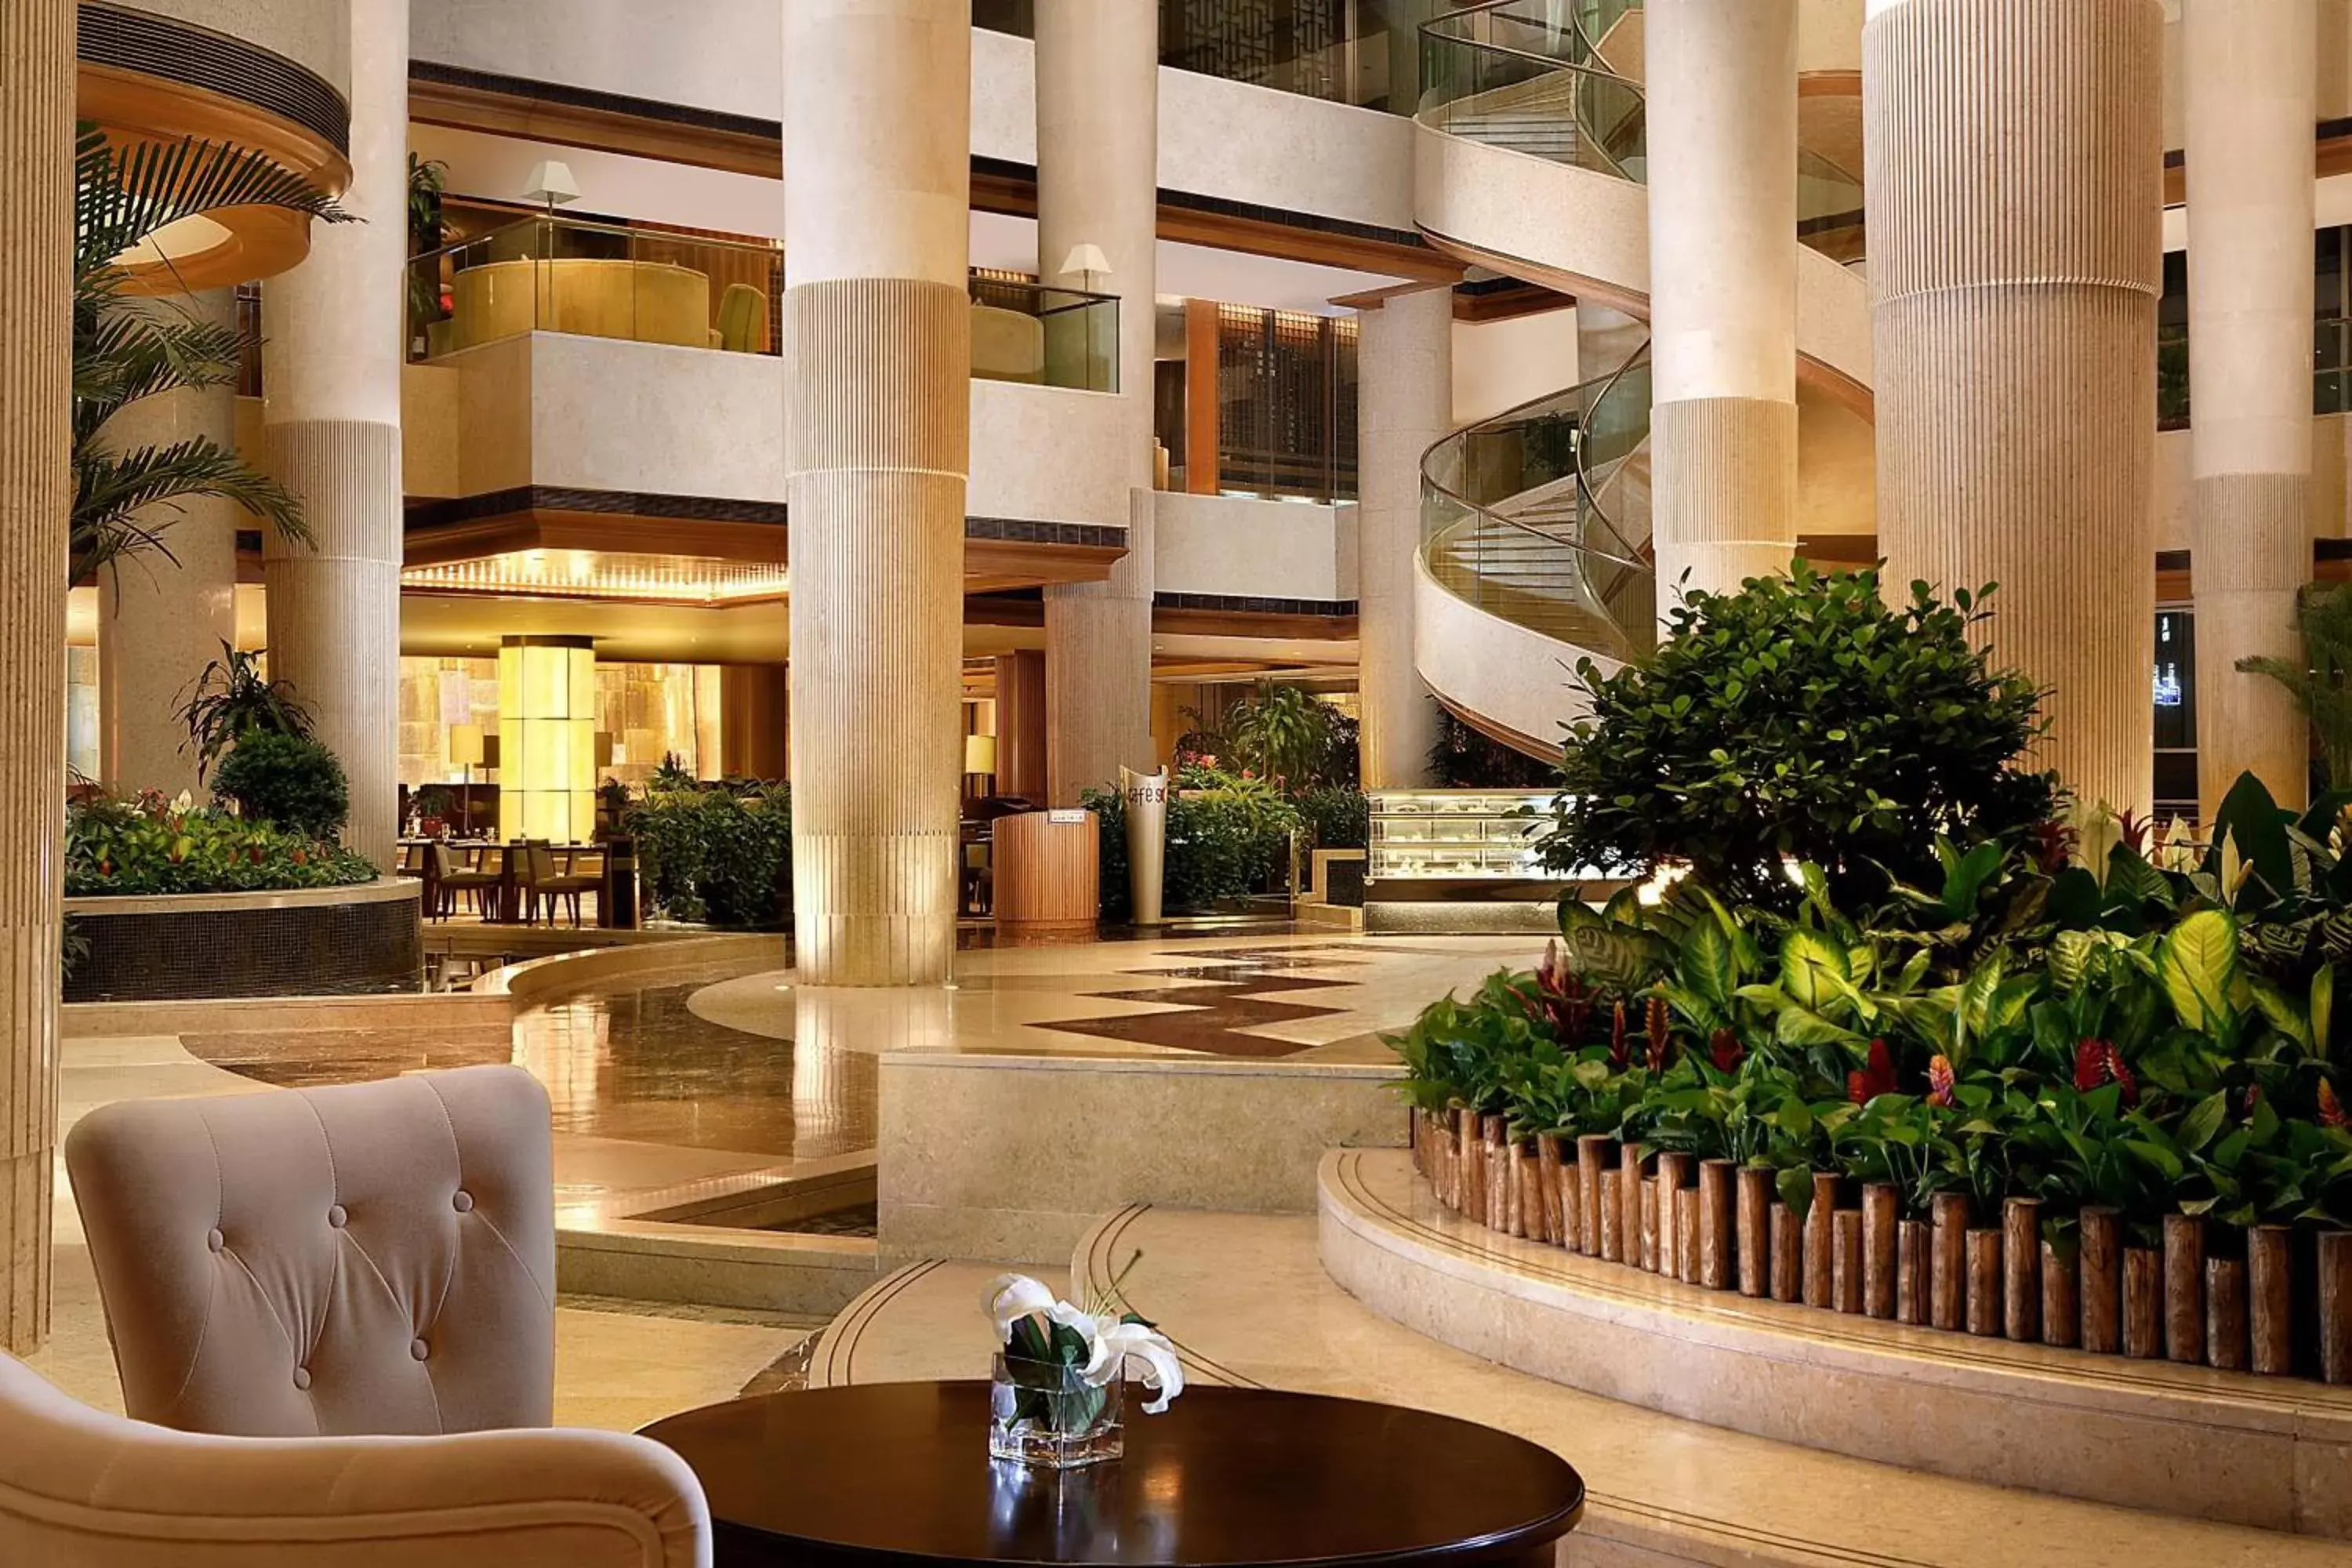 Lobby or reception in Sheraton Ningbo Hotel - Tianyi Square